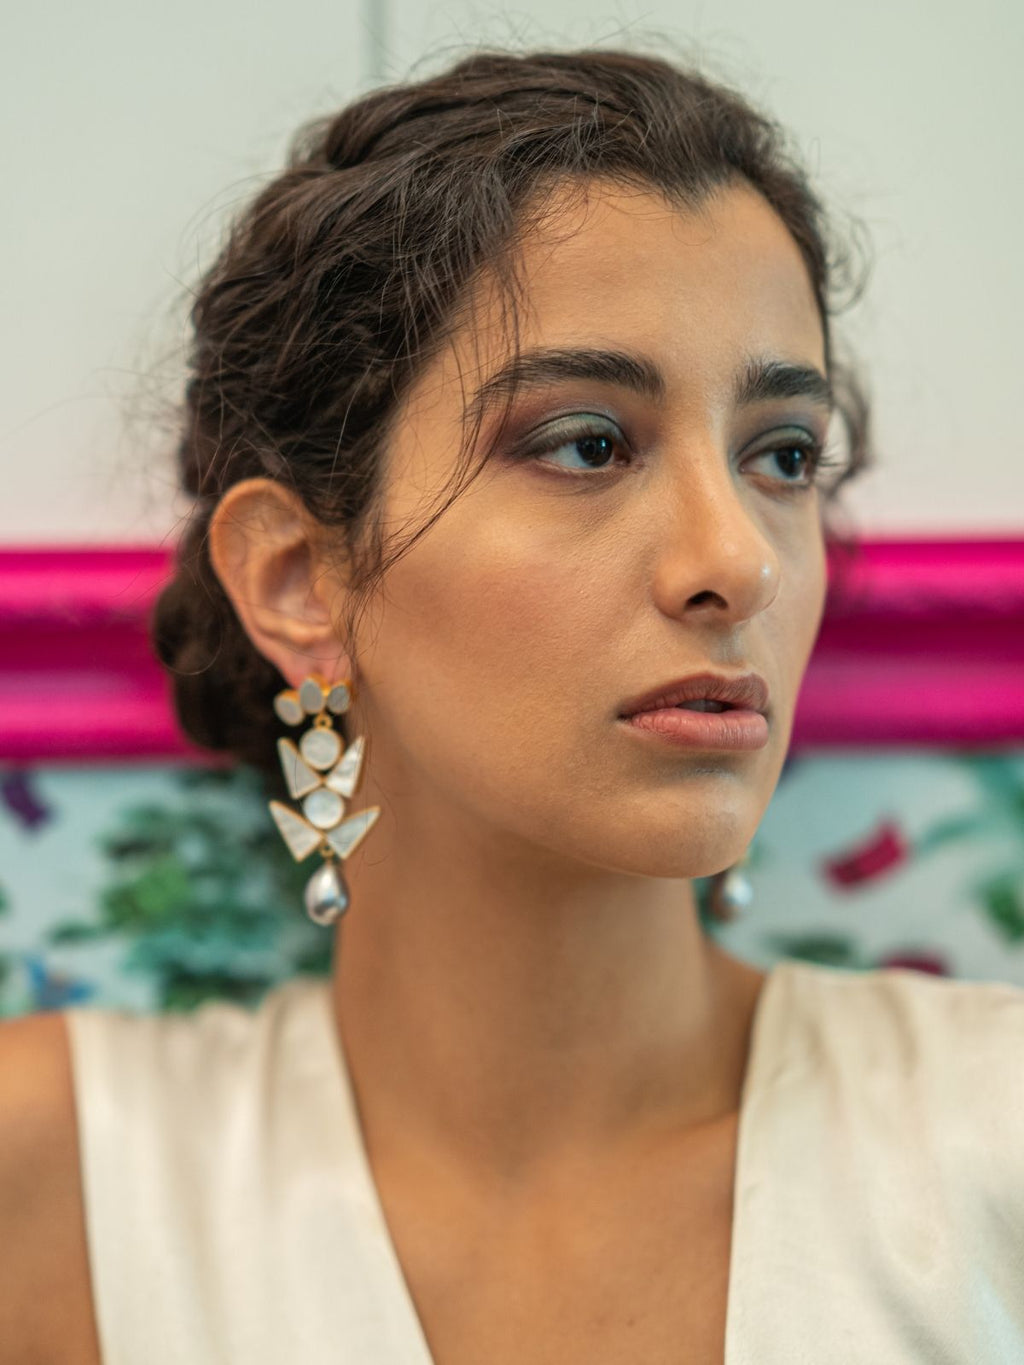 Dori - Idina Pearl Earrings - Handcrafted Jewellery